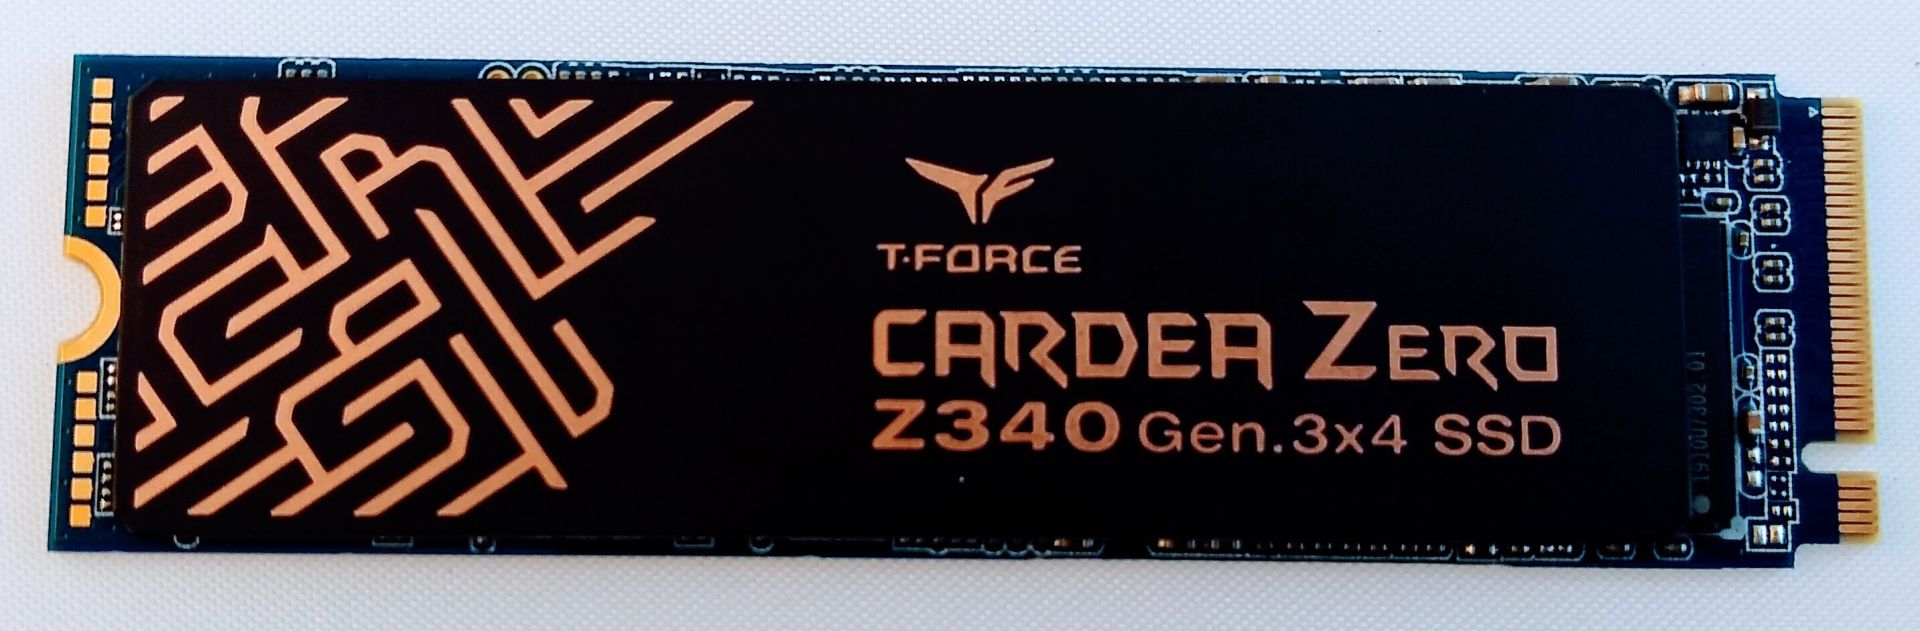 Team Group Cardea Zero Z340 NVMe Review - Overclockers